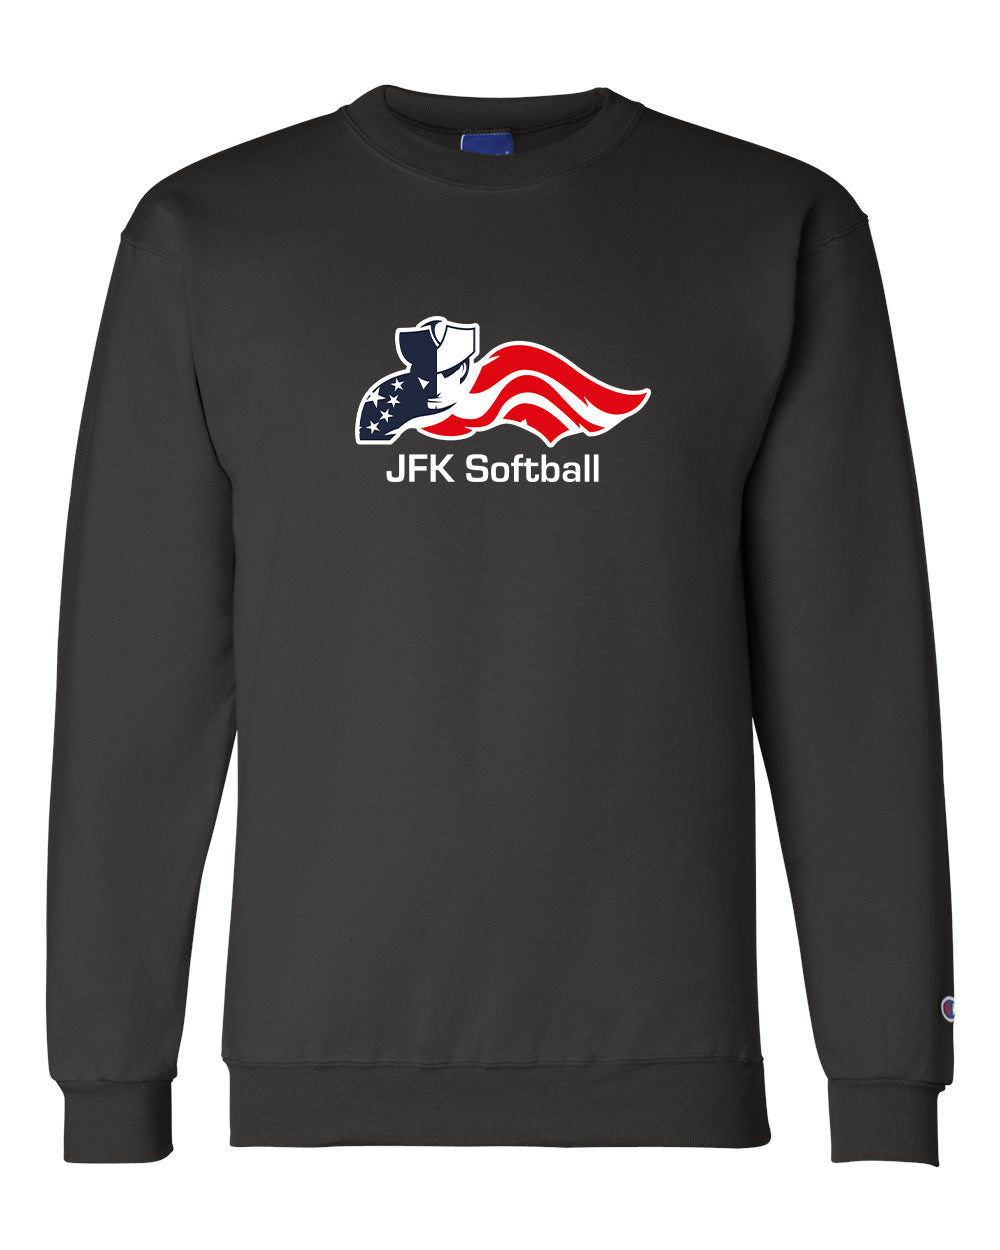 JFK Softball Adult Champion Crew Neck "Softball" - S600 (color options available)